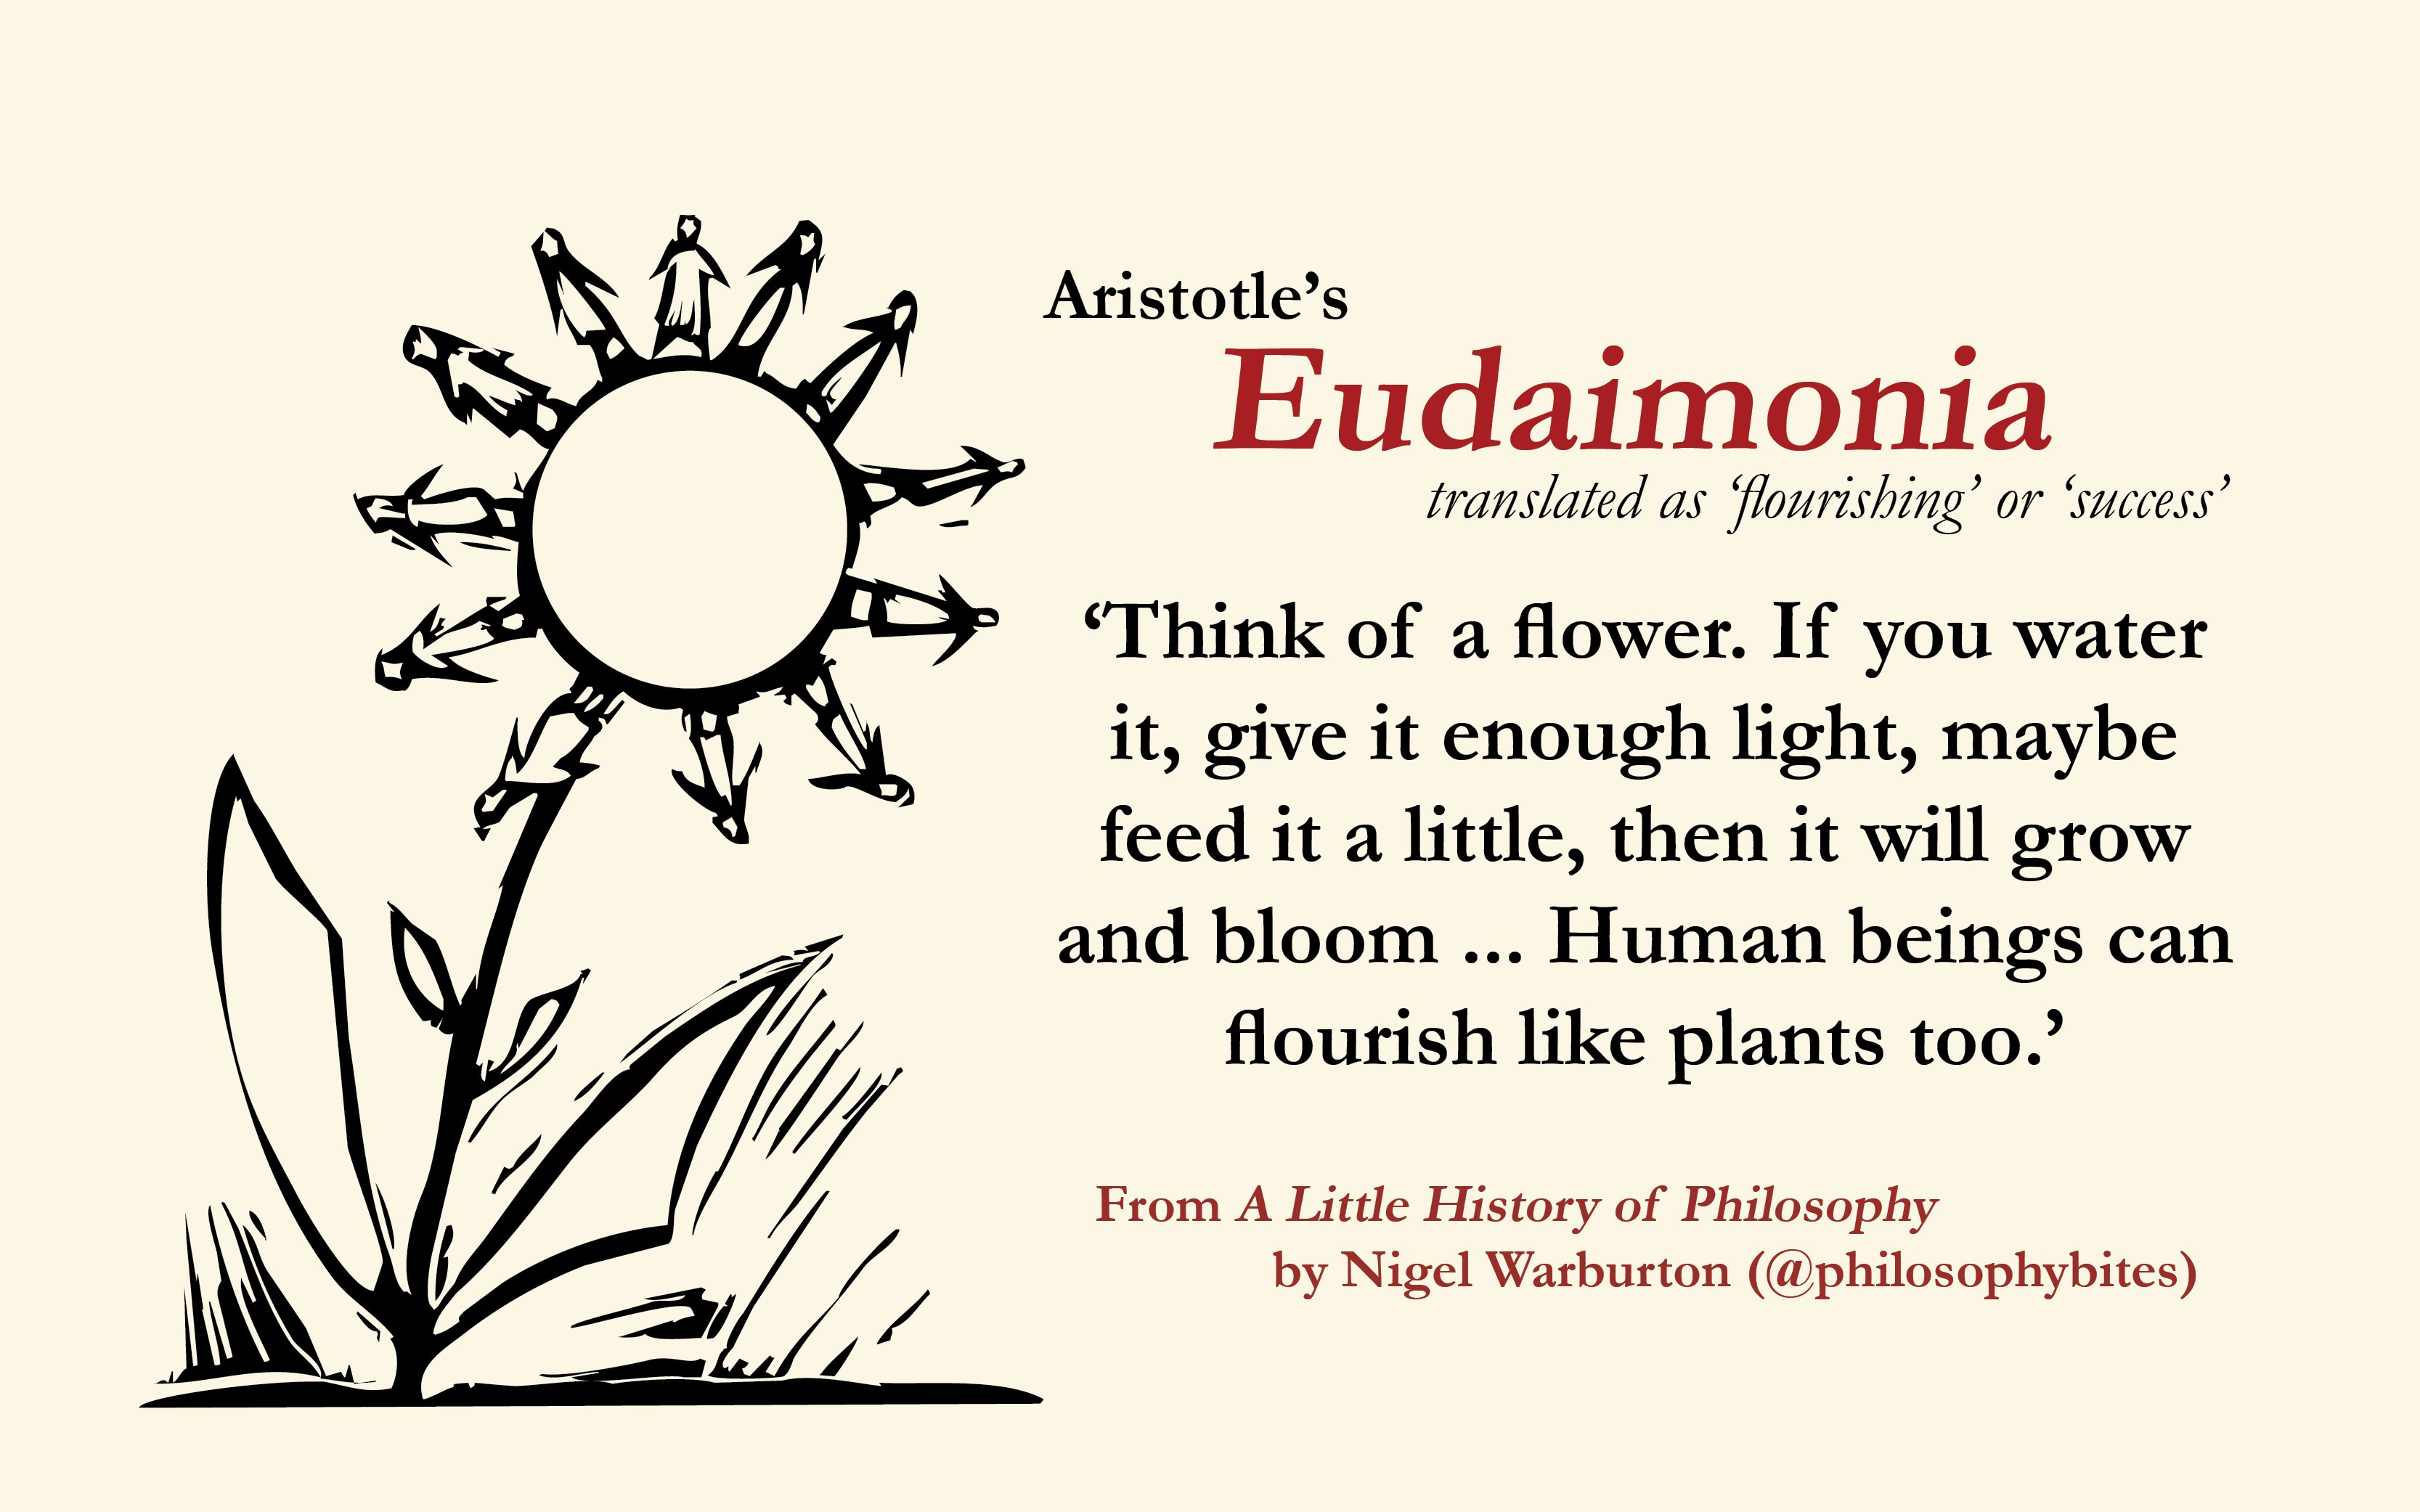 Little Histories on X: "What is true happiness? Aristotle called it  Eudaimonia #FridayFeeling #LittleHistory #philosophy @philosophybites  https://t.co/hB7FLCvvUj" / X